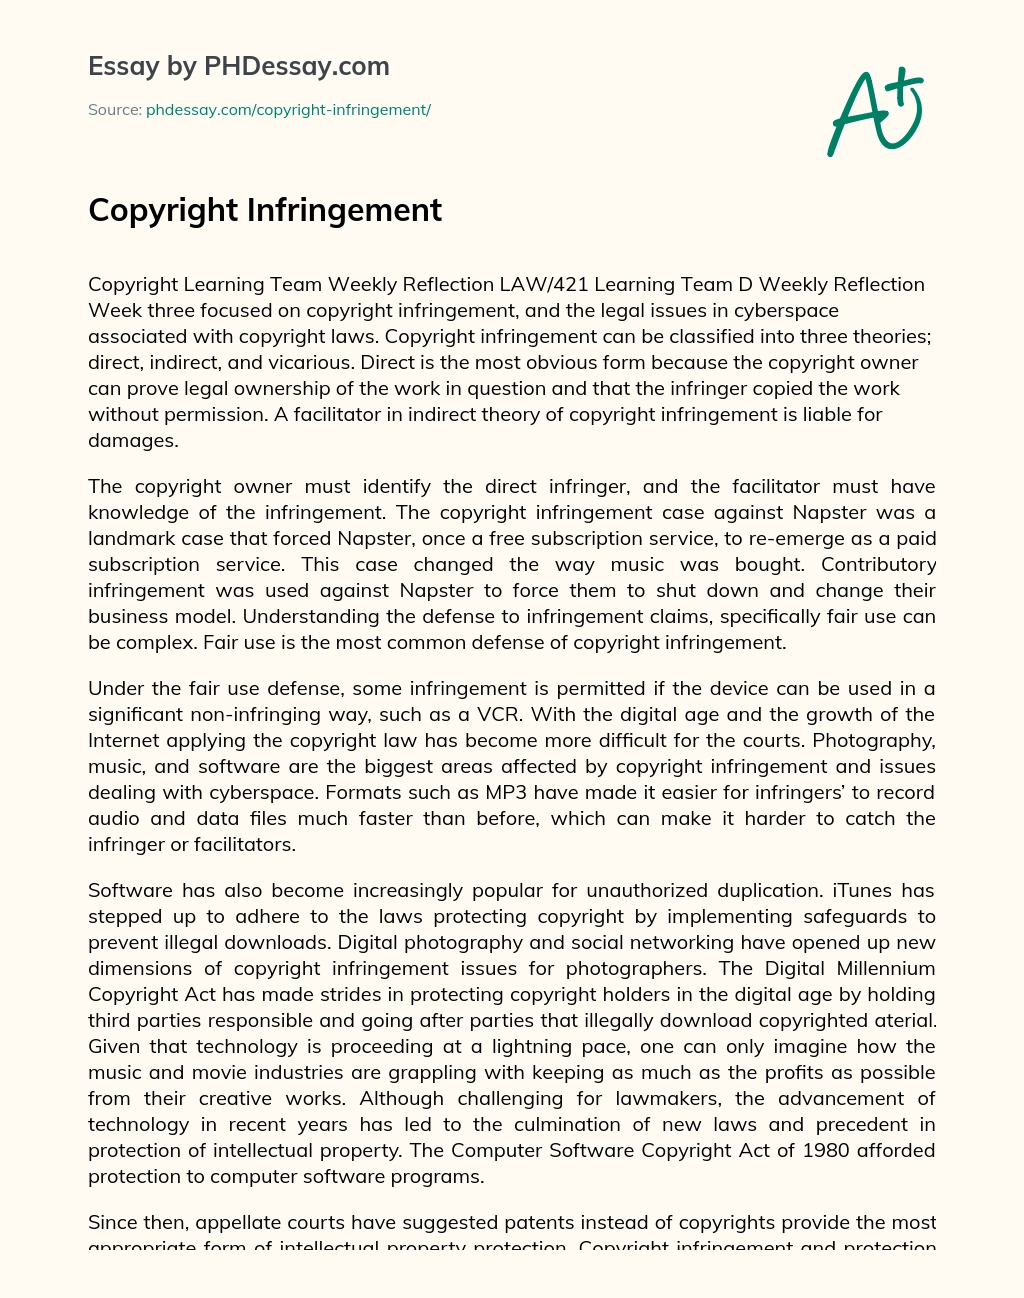 Реферат: Copyright Infringement Essay Research Paper A copyright